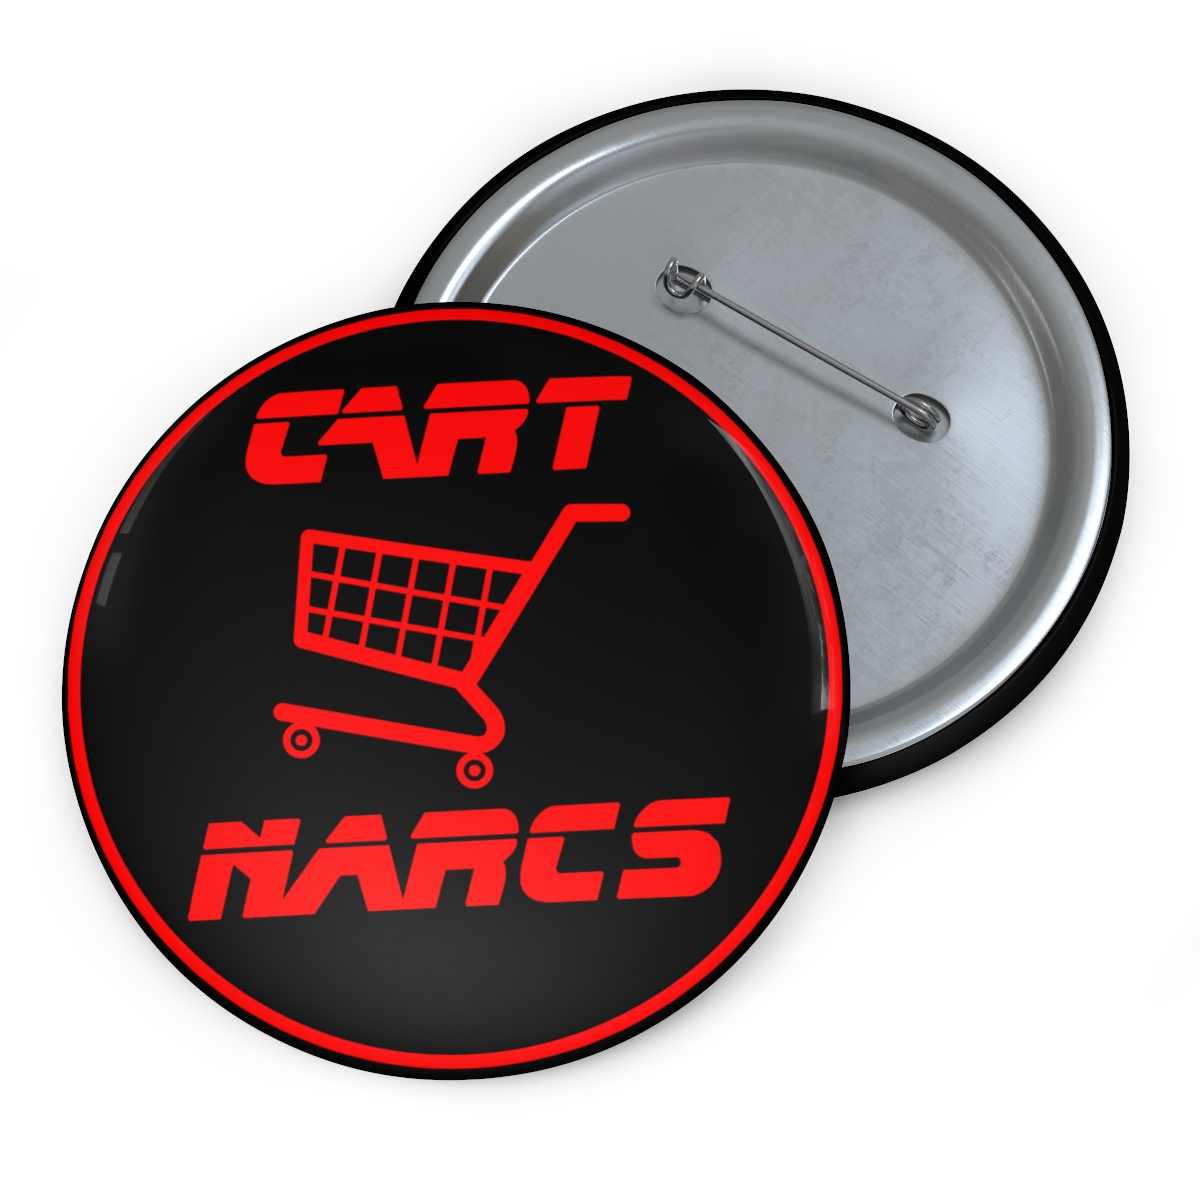 Cart Narcs Pin Button product thumbnail image